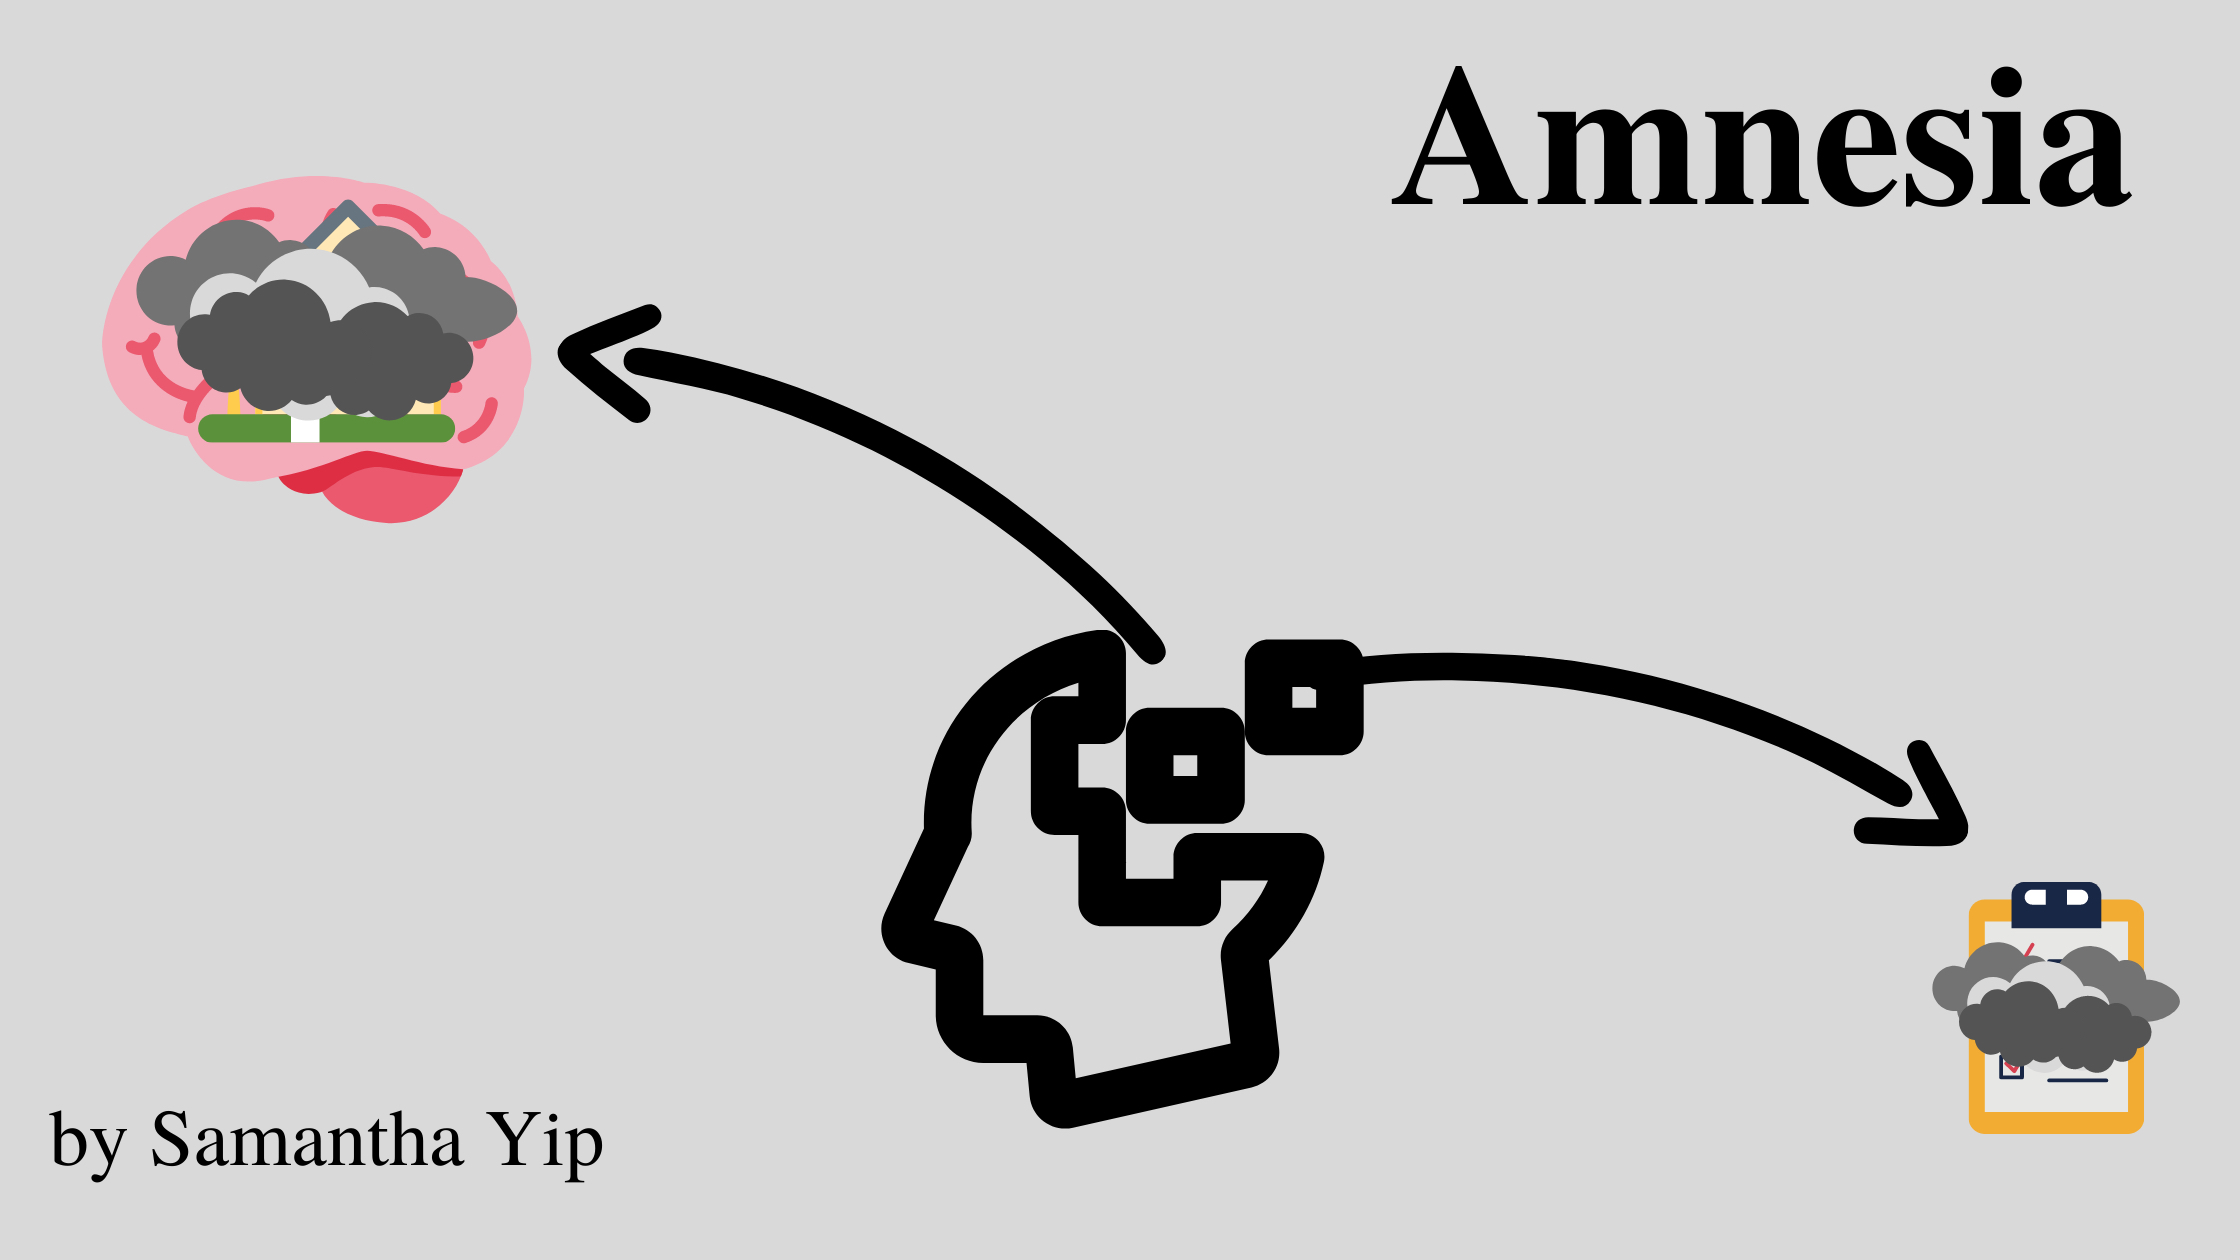 Amnesia: Sitcom Trope or Reality?